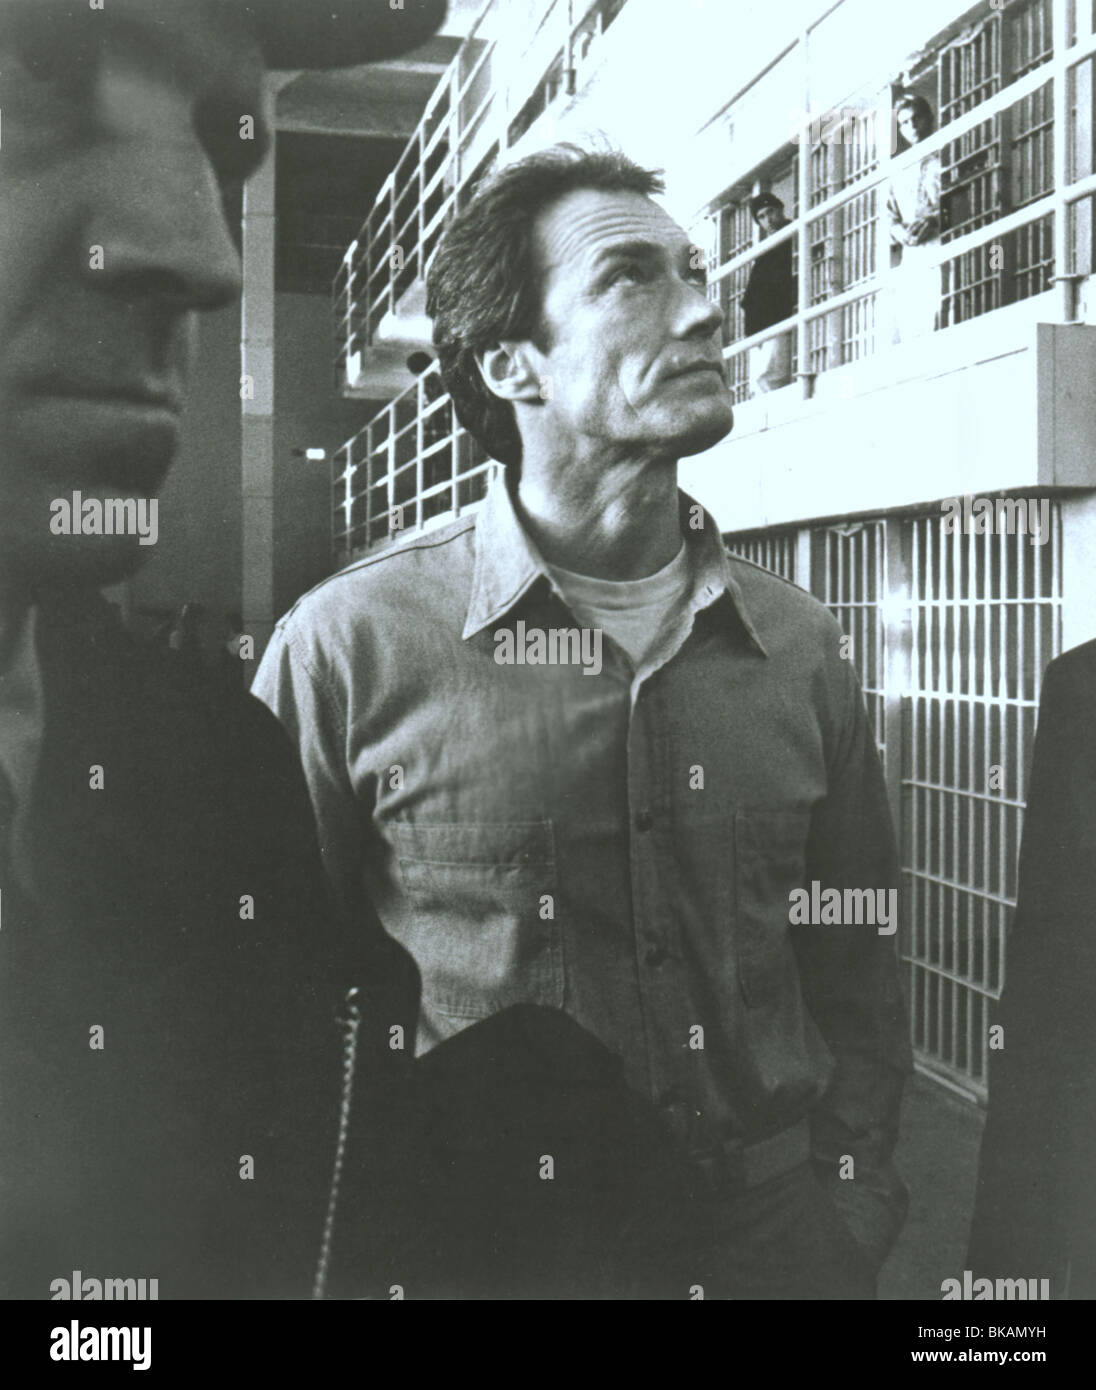 S'échapper d'Alcatraz (1979) CLINT EASTWOOD ALE 002P Banque D'Images